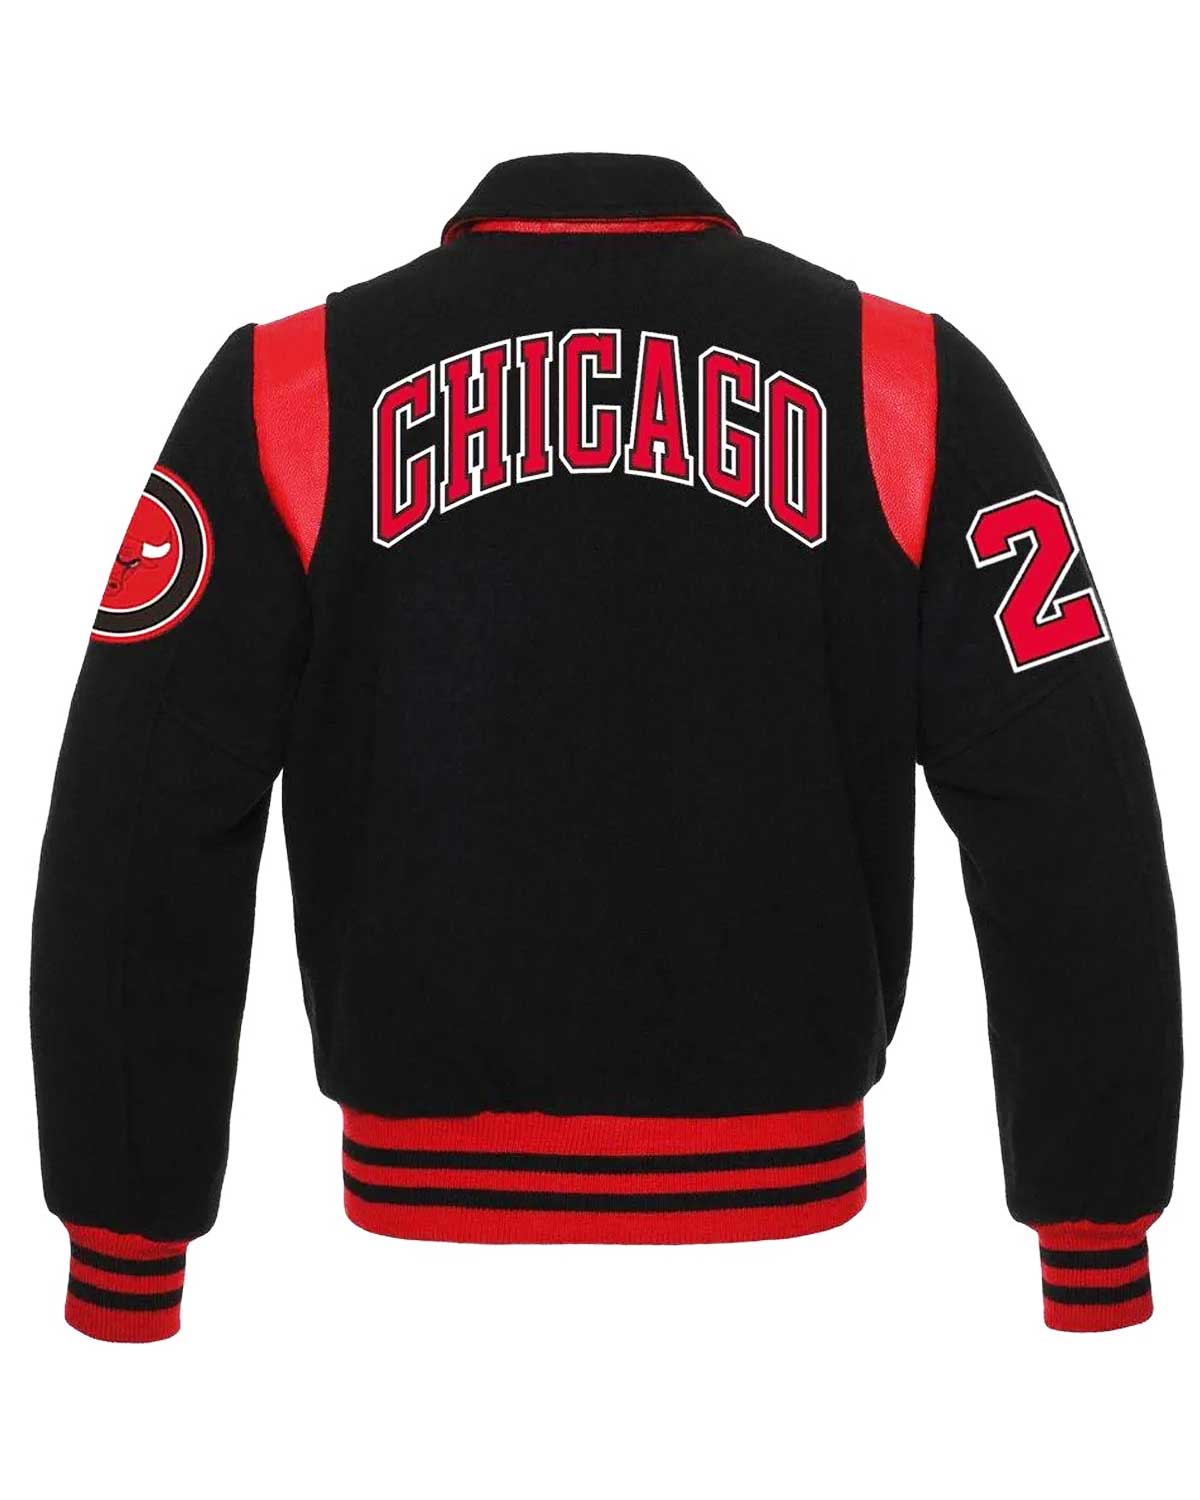 Chicago Bulls Black And Red Bomber Wool Jacket | Elite Jacket